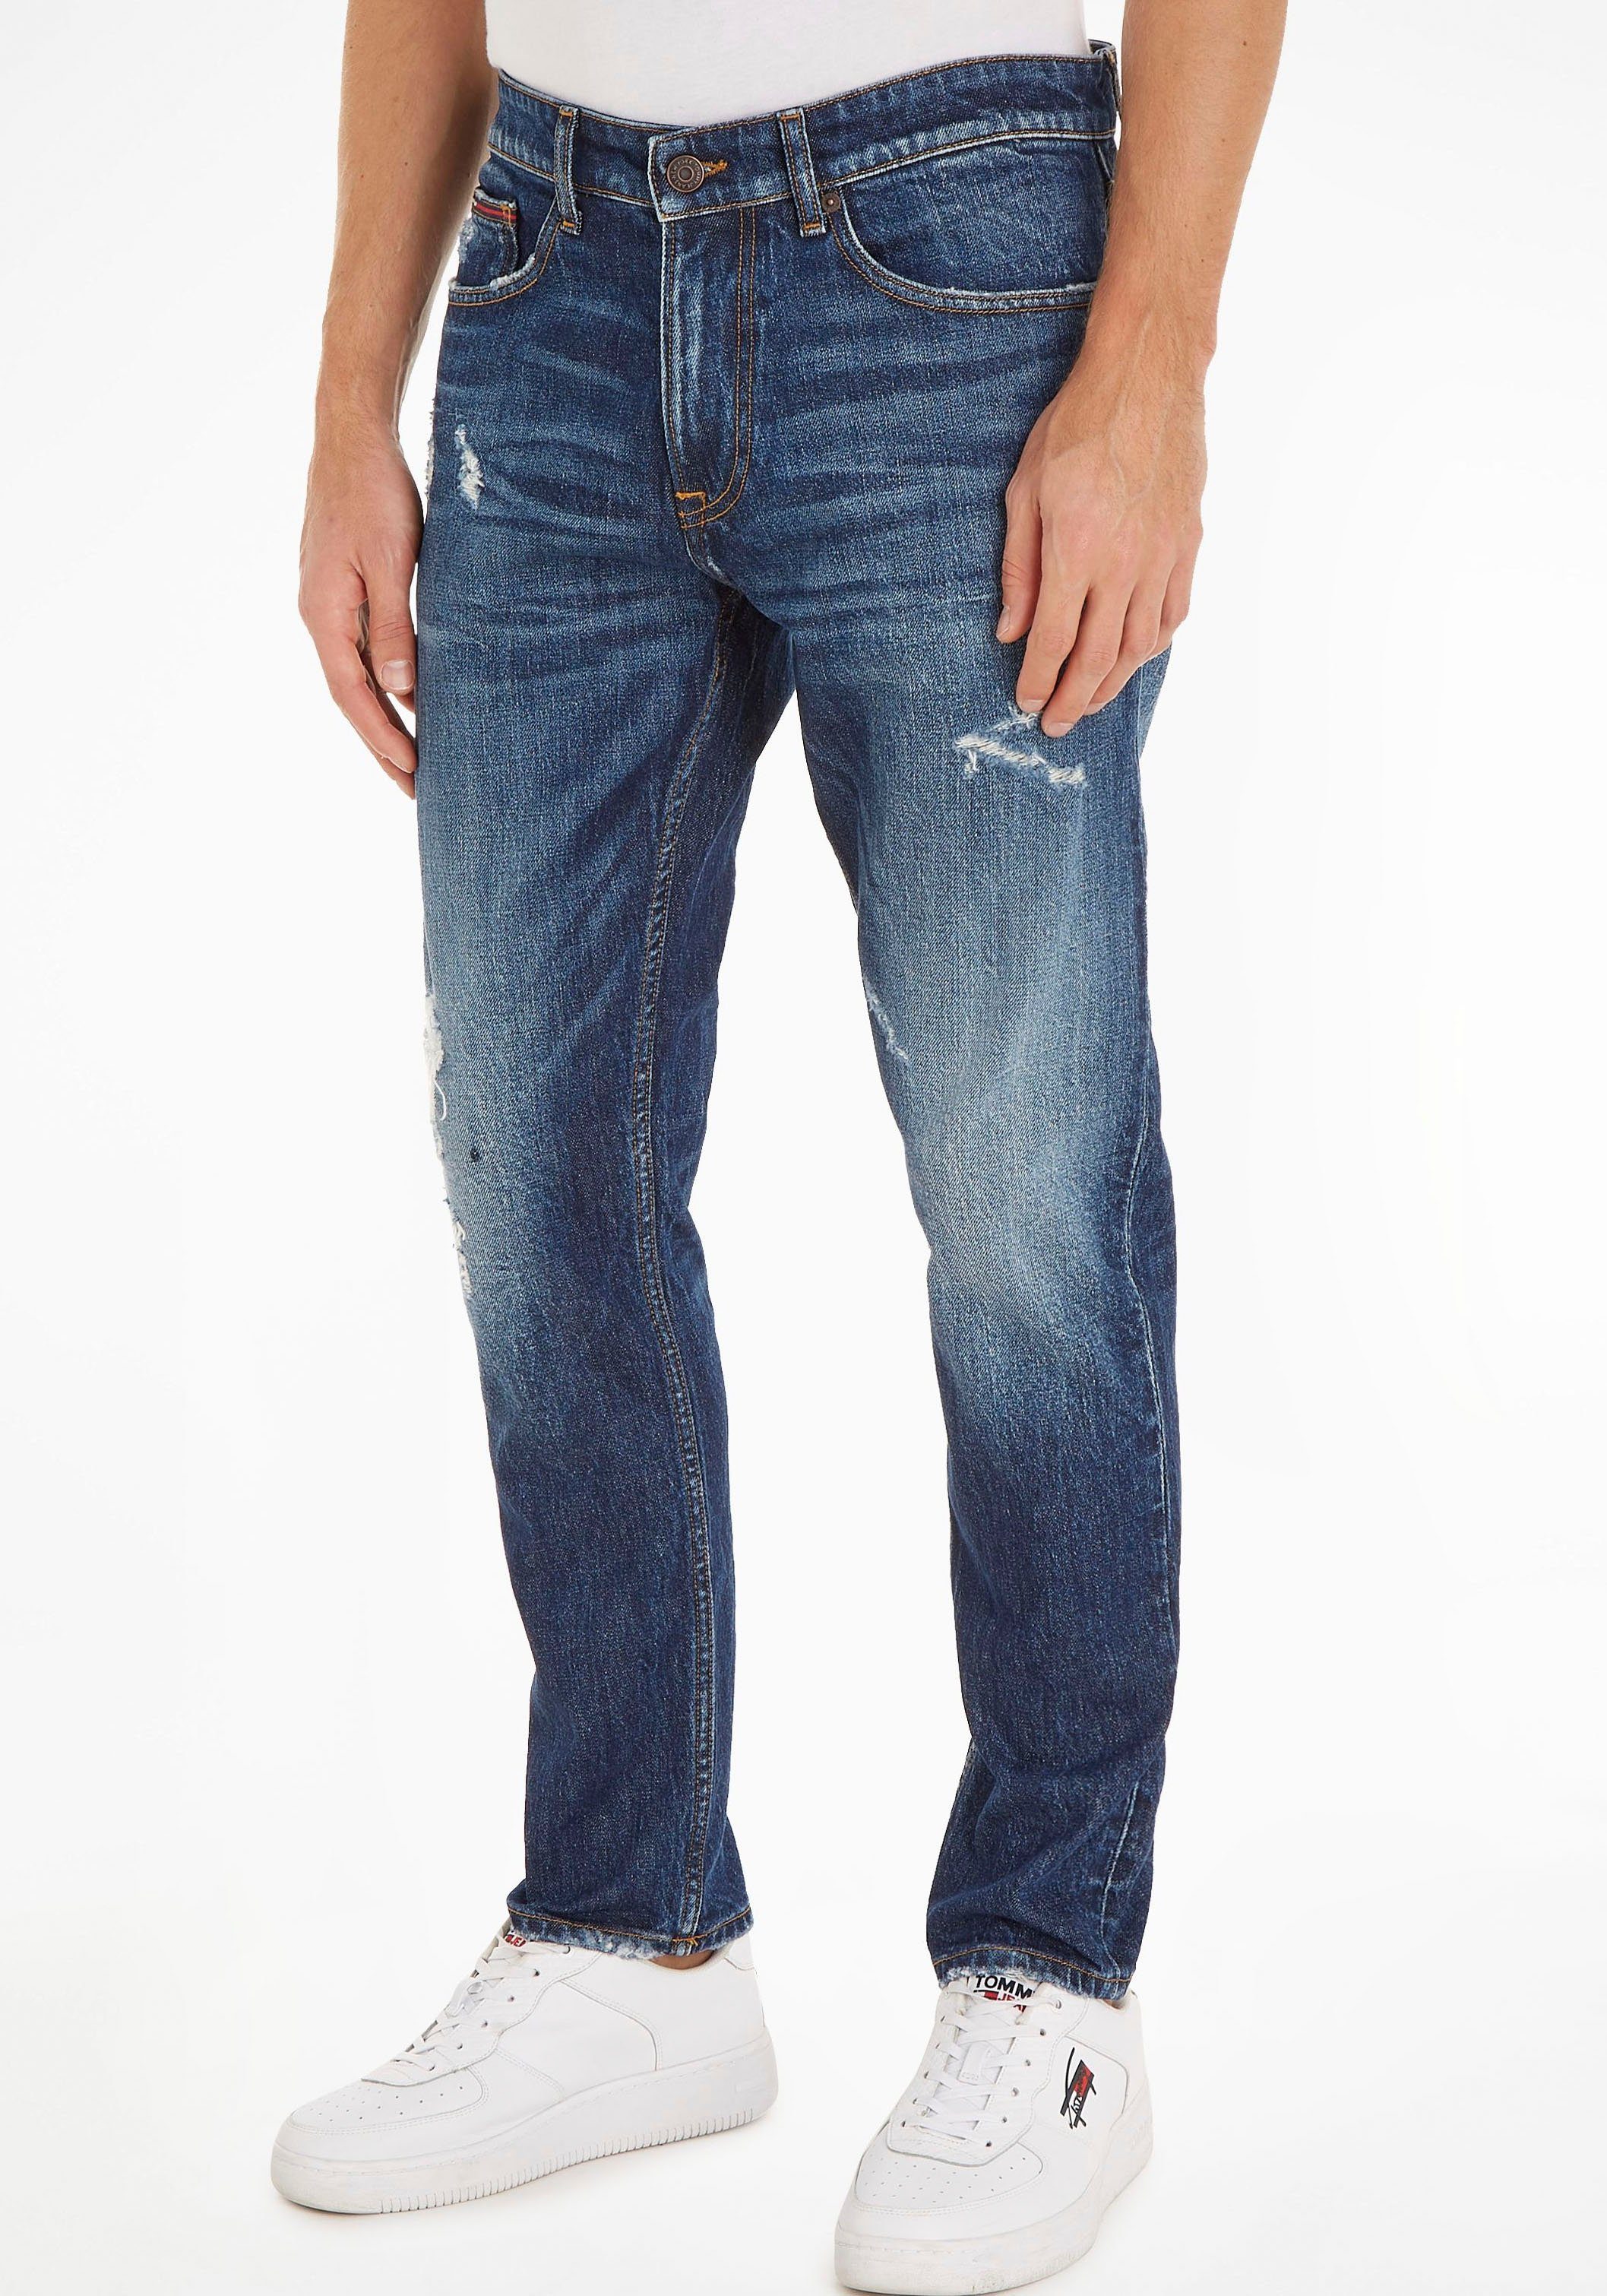 Tommy Jeans 5-Pocket-Jeans AUSTIN SLIM TPRD CG2153